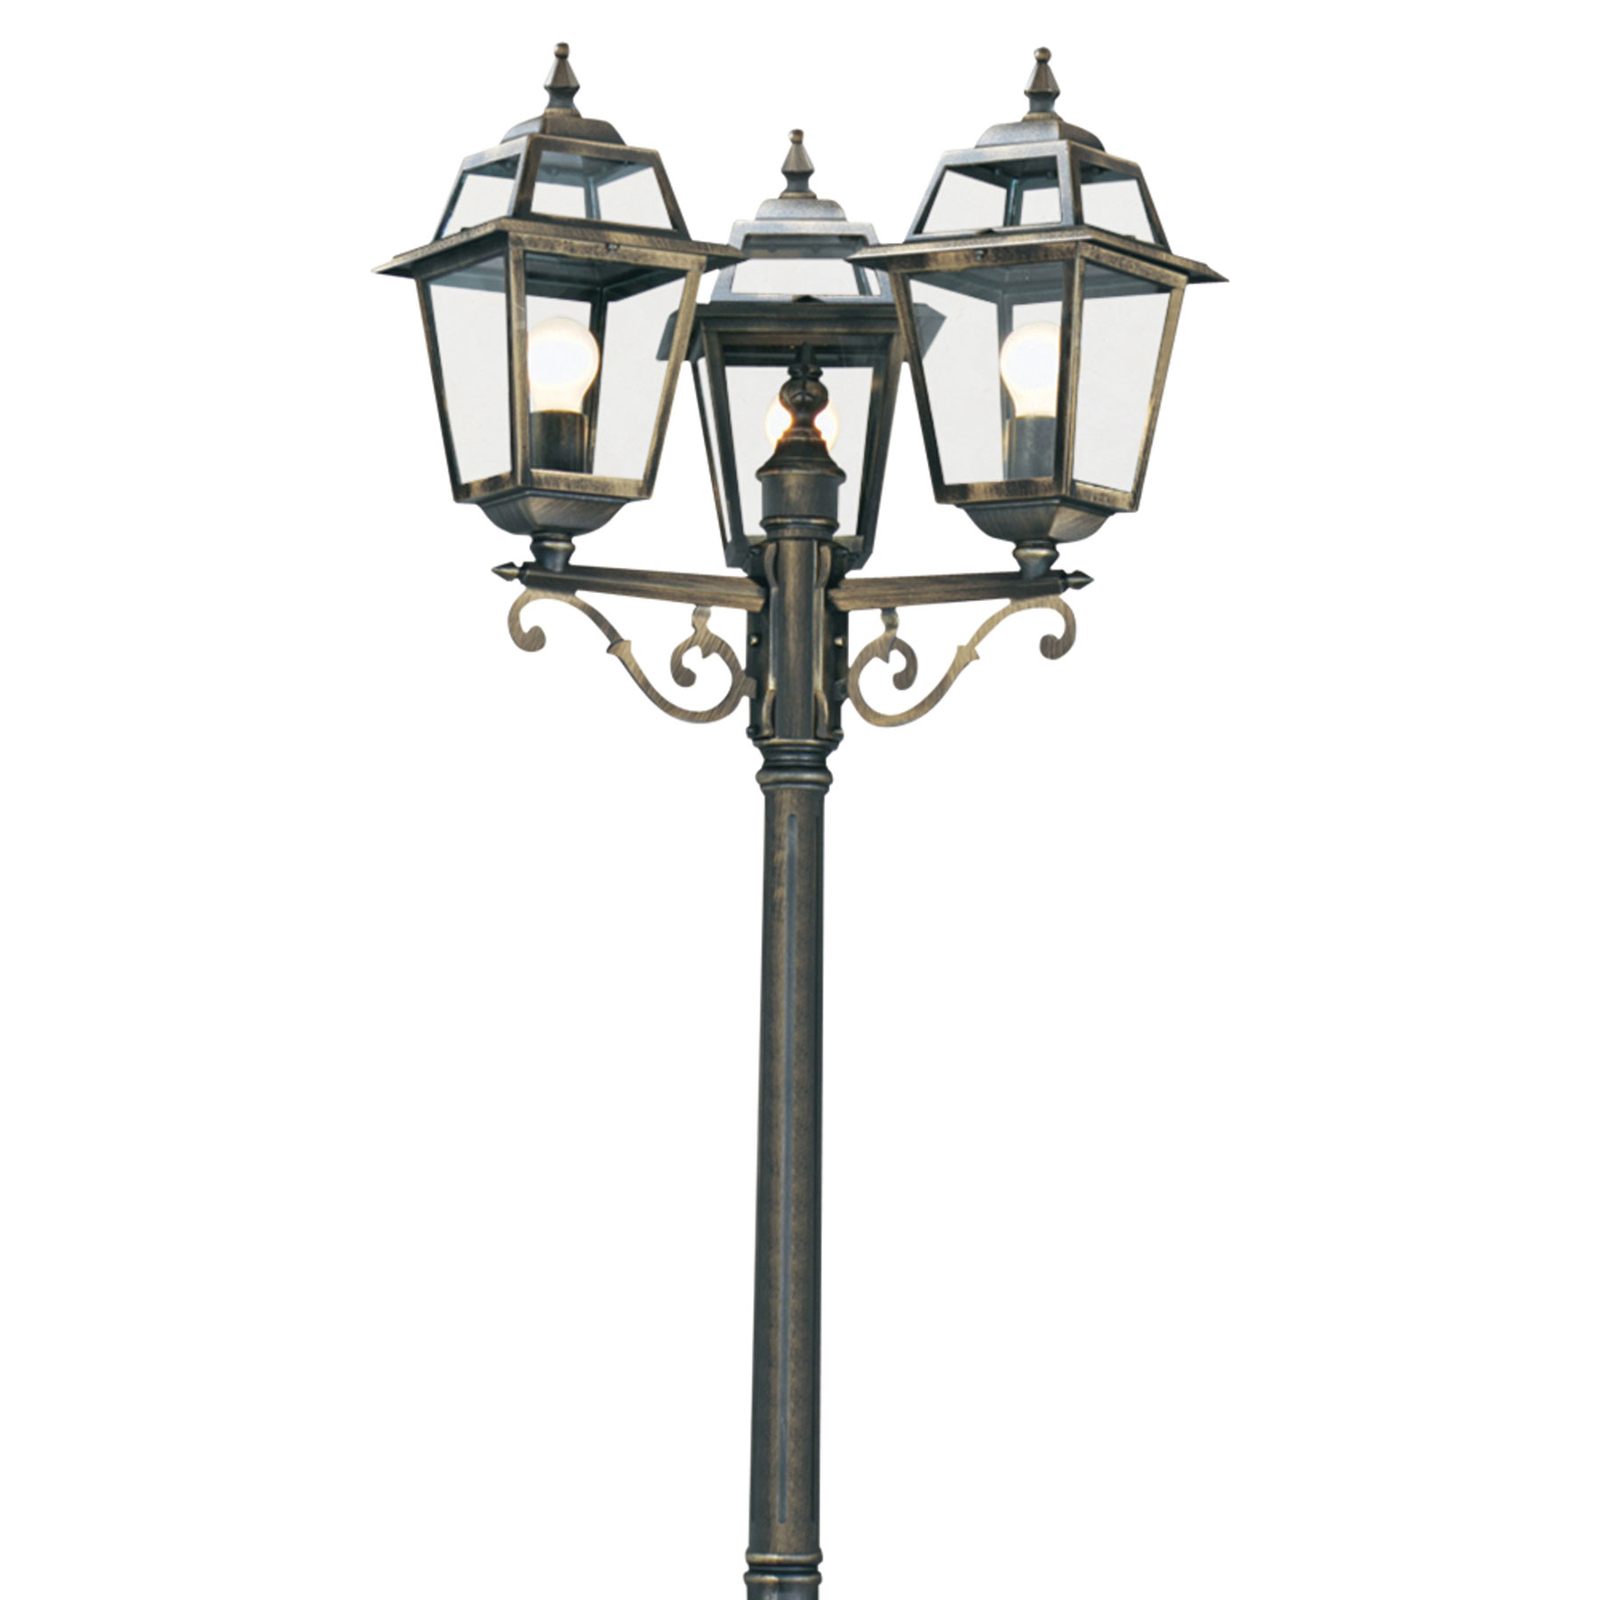 New Orleans lamp post, black-gold, three-bulb